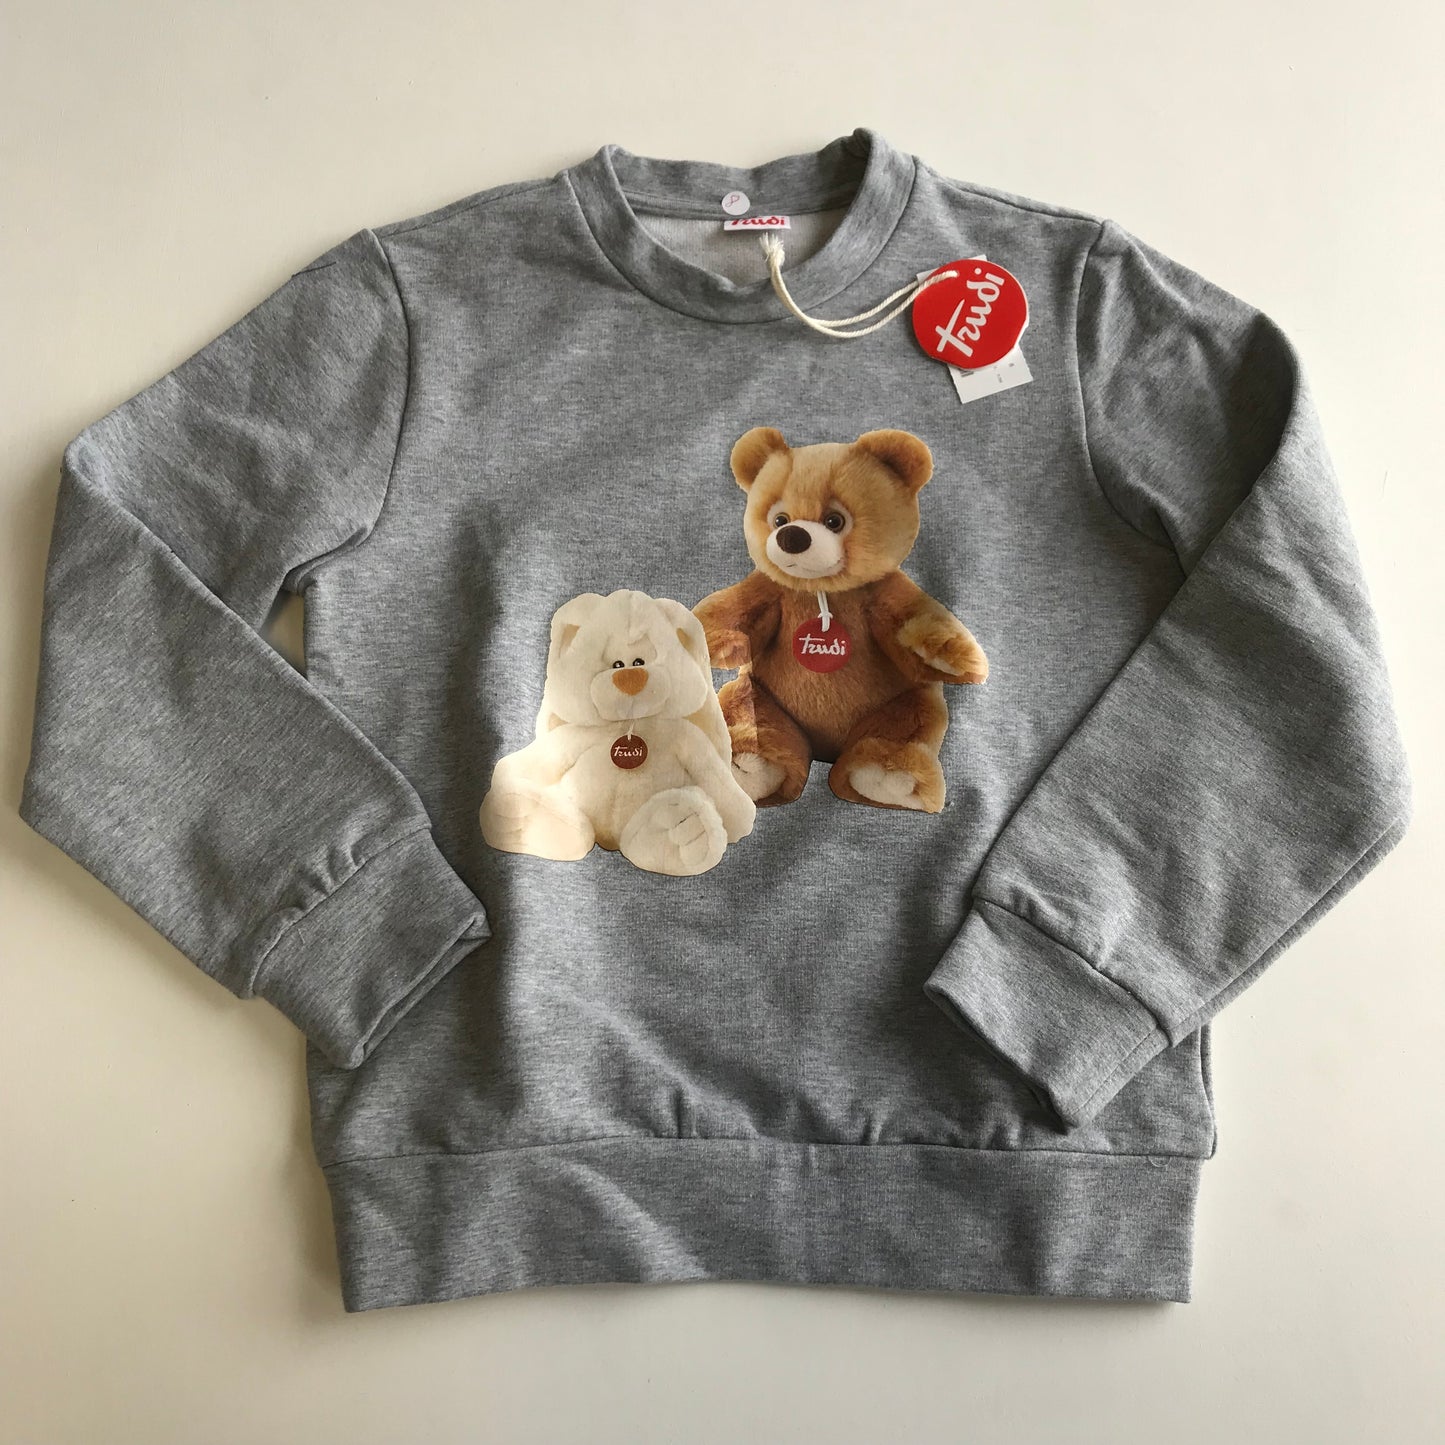 Sweatshirt - Grey with Teddies - Age 8